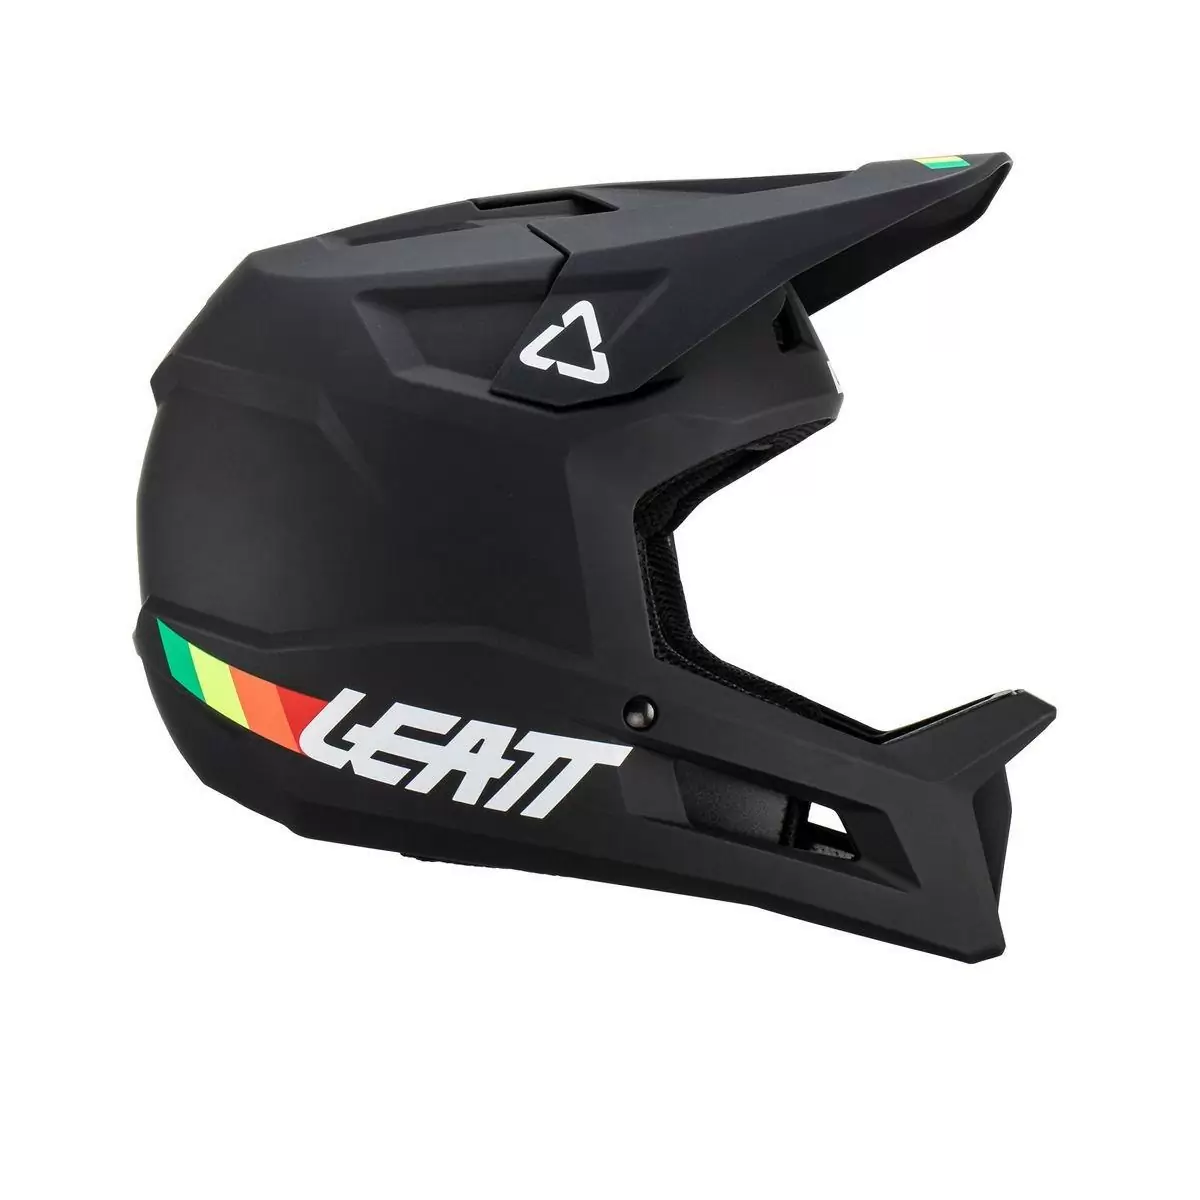 Gravity 1.0 MTB Fullface Helmet Stealth Black Size L (59-60cm) #2